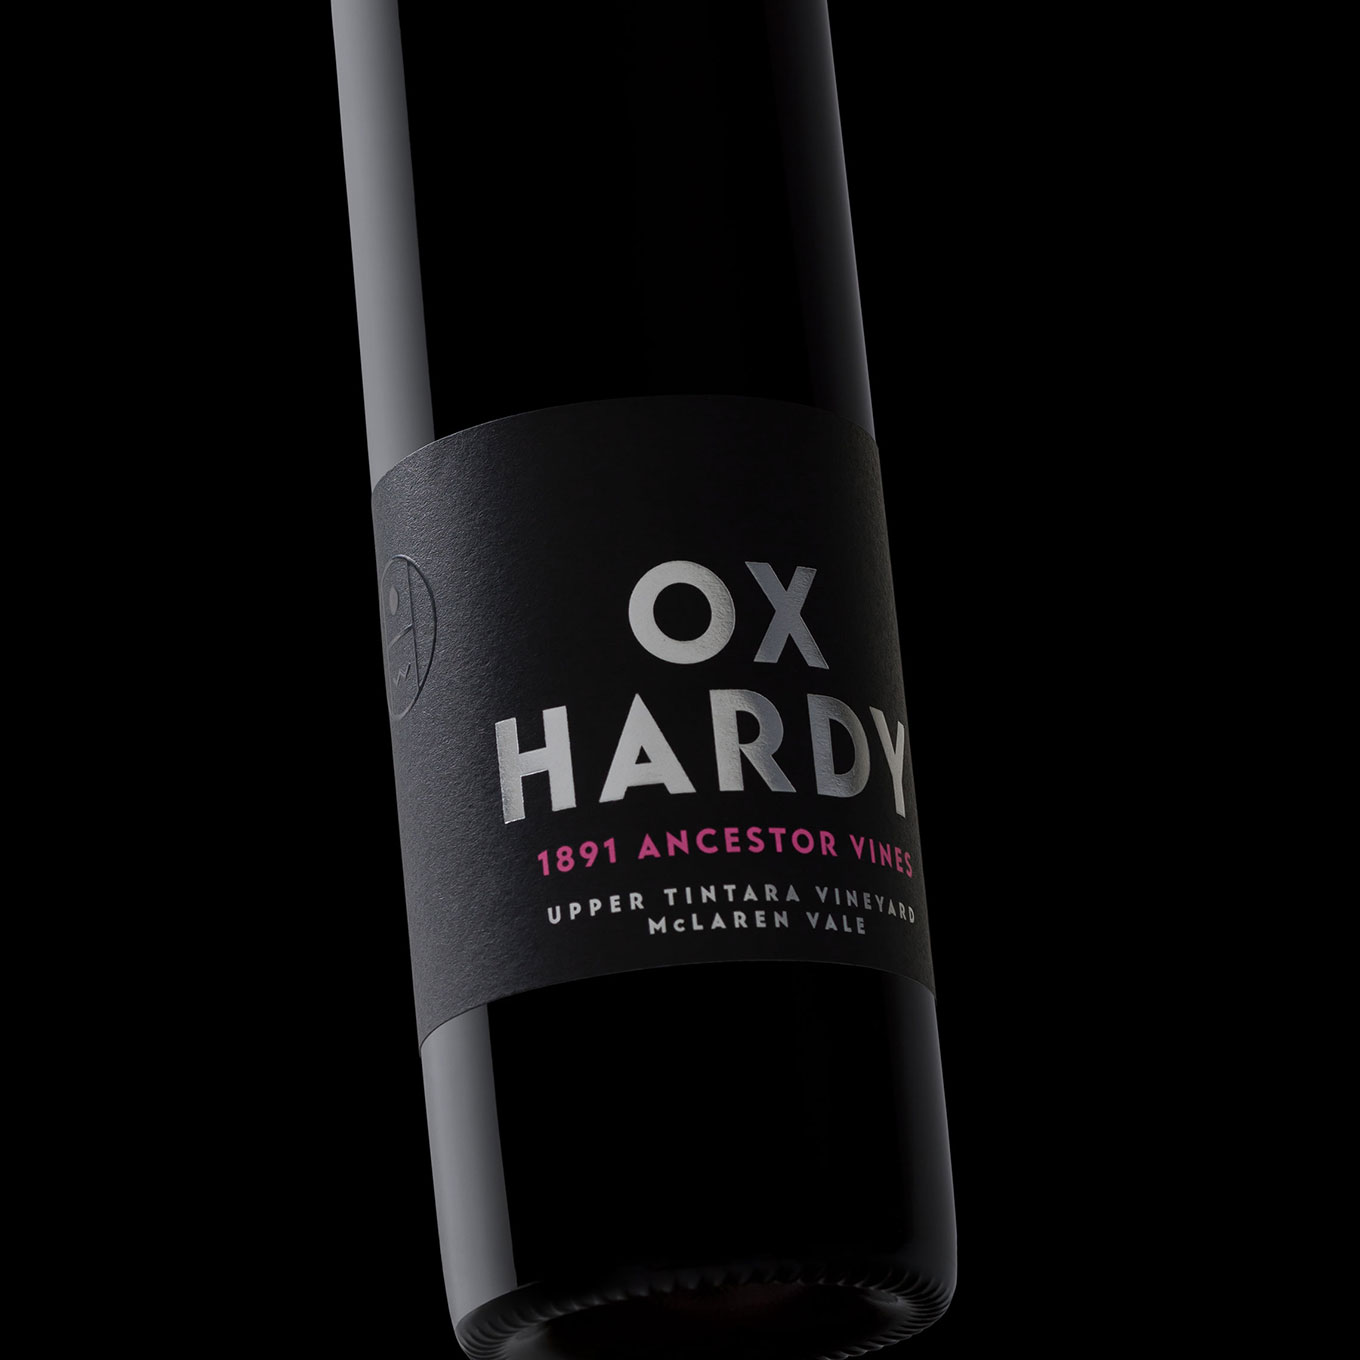 Ox Hardy Wines, Big Ox Upper Tintara Vineyard 1891 Ancestor Vines Shiraz